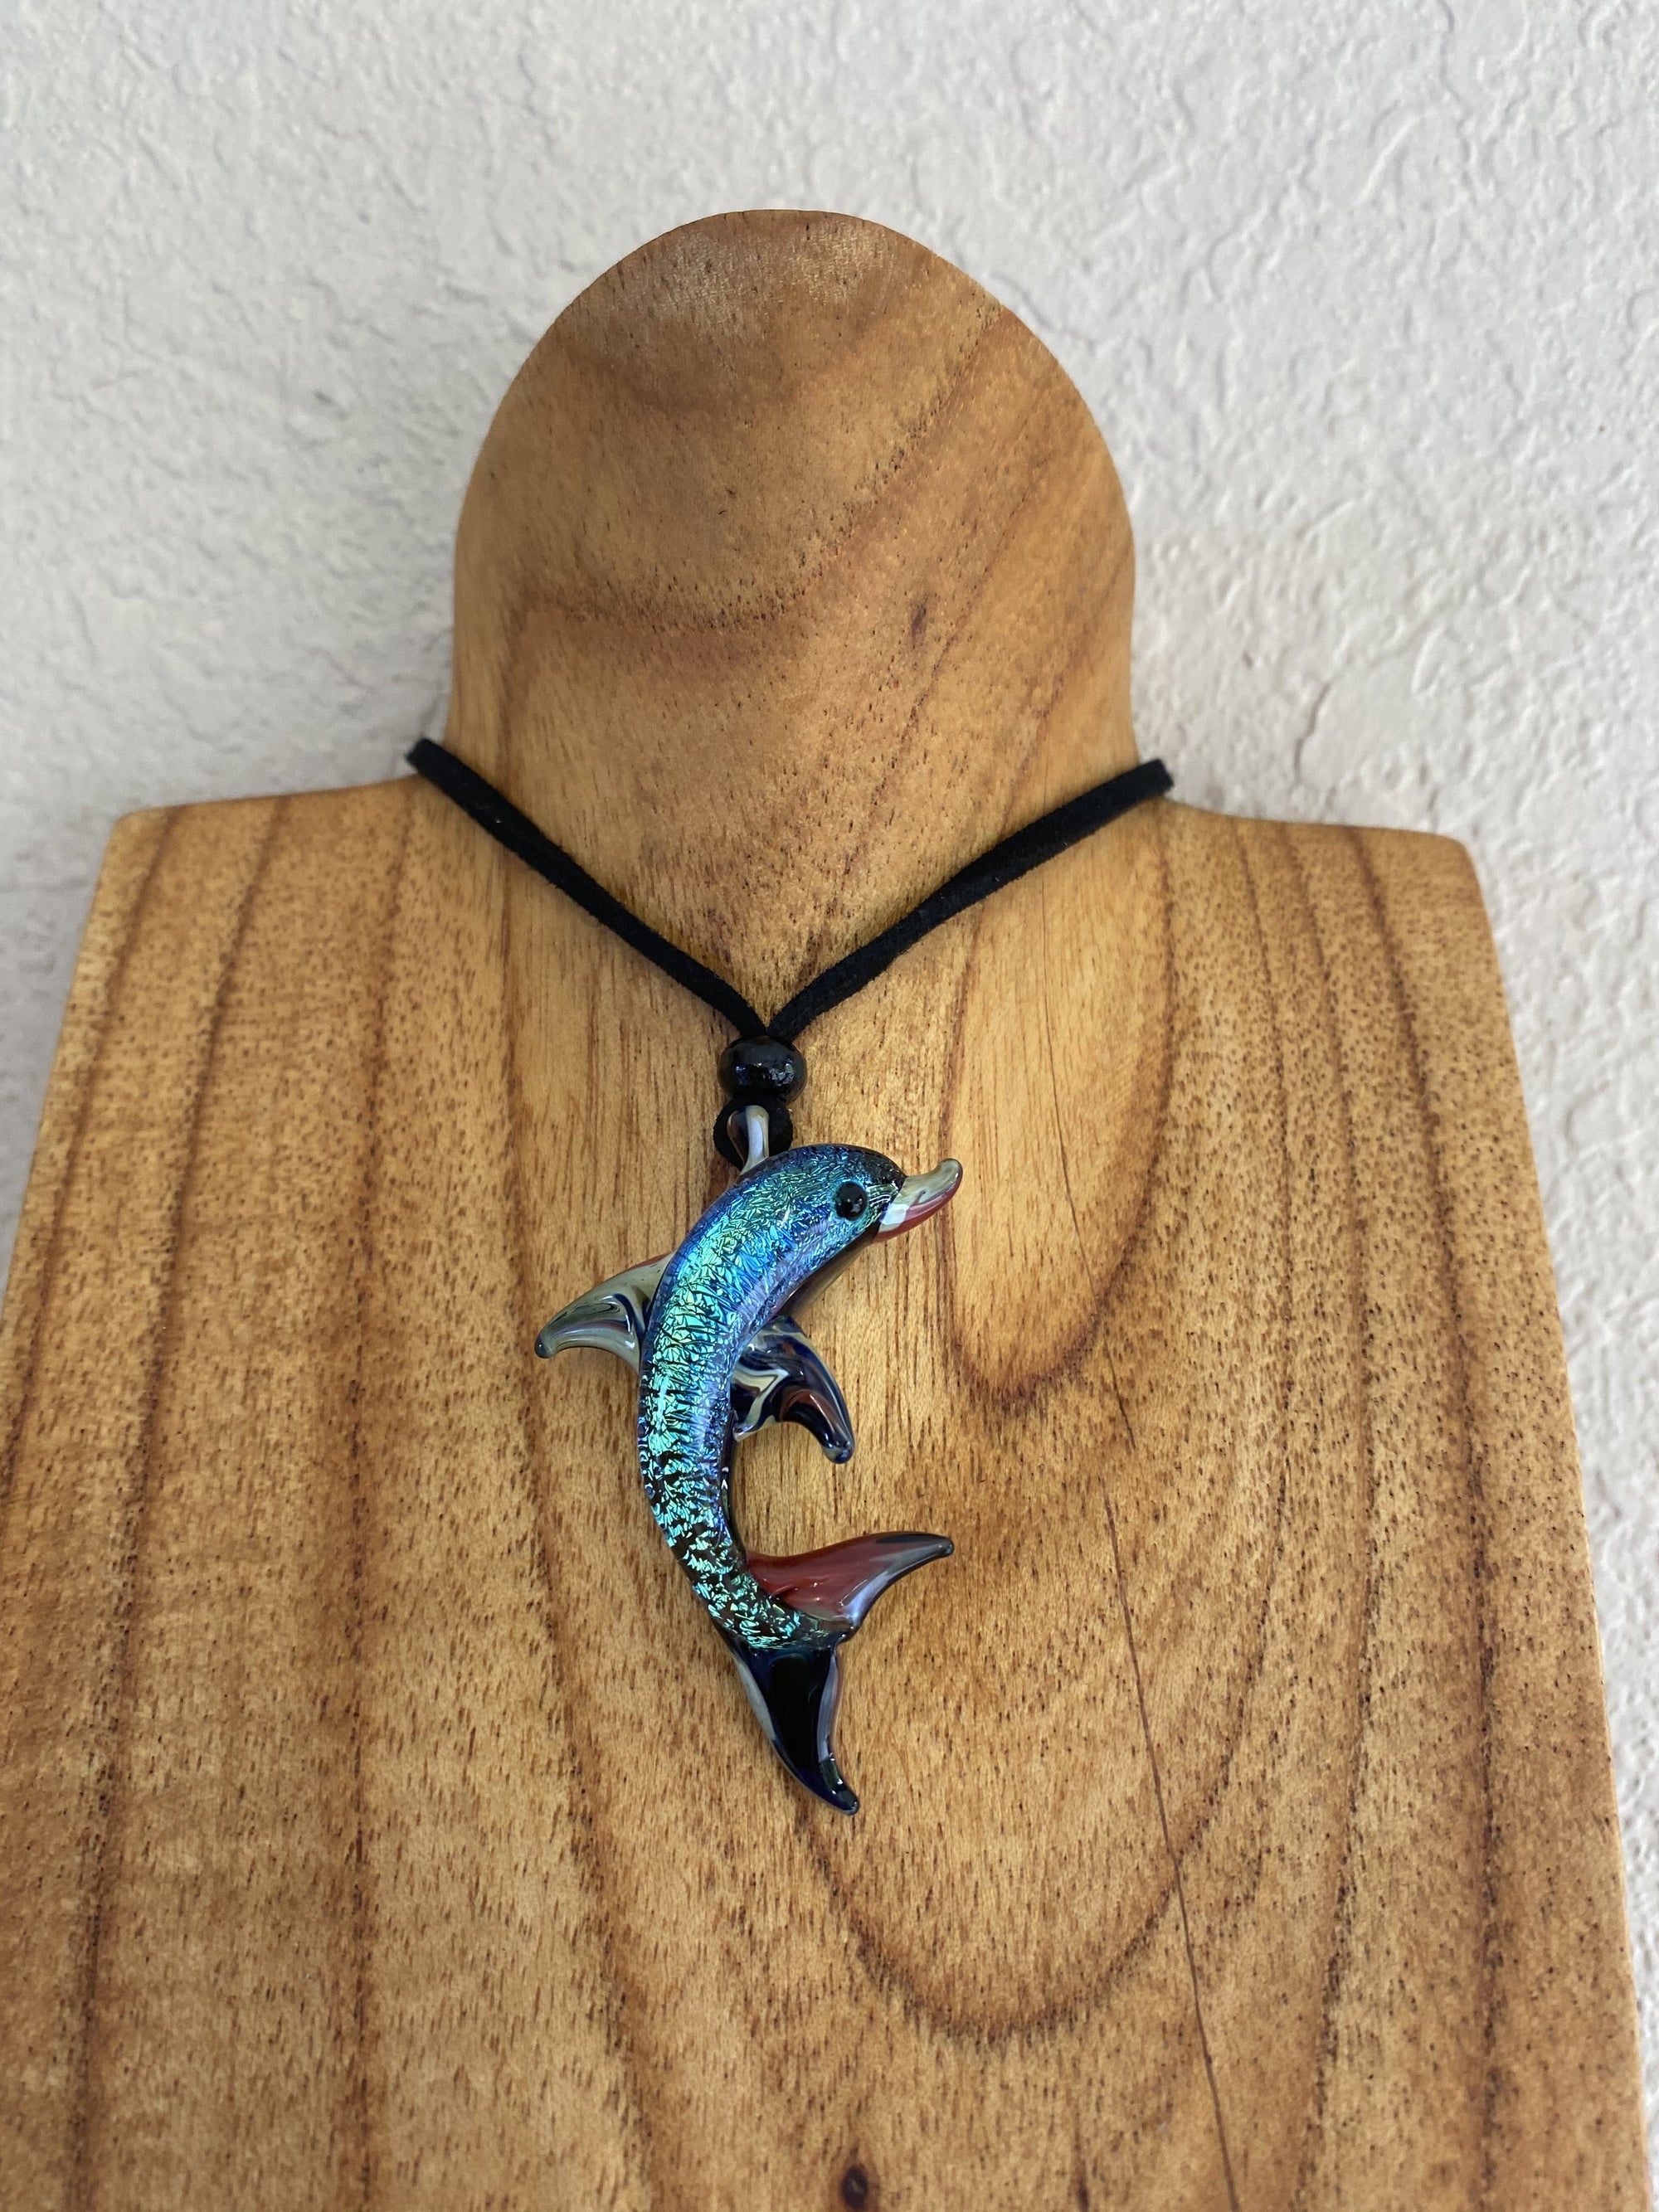 Pop-Up Mākeke - Happa Hawaii Collections - Dolphin Dichro Glass Pendant - Emerald Green